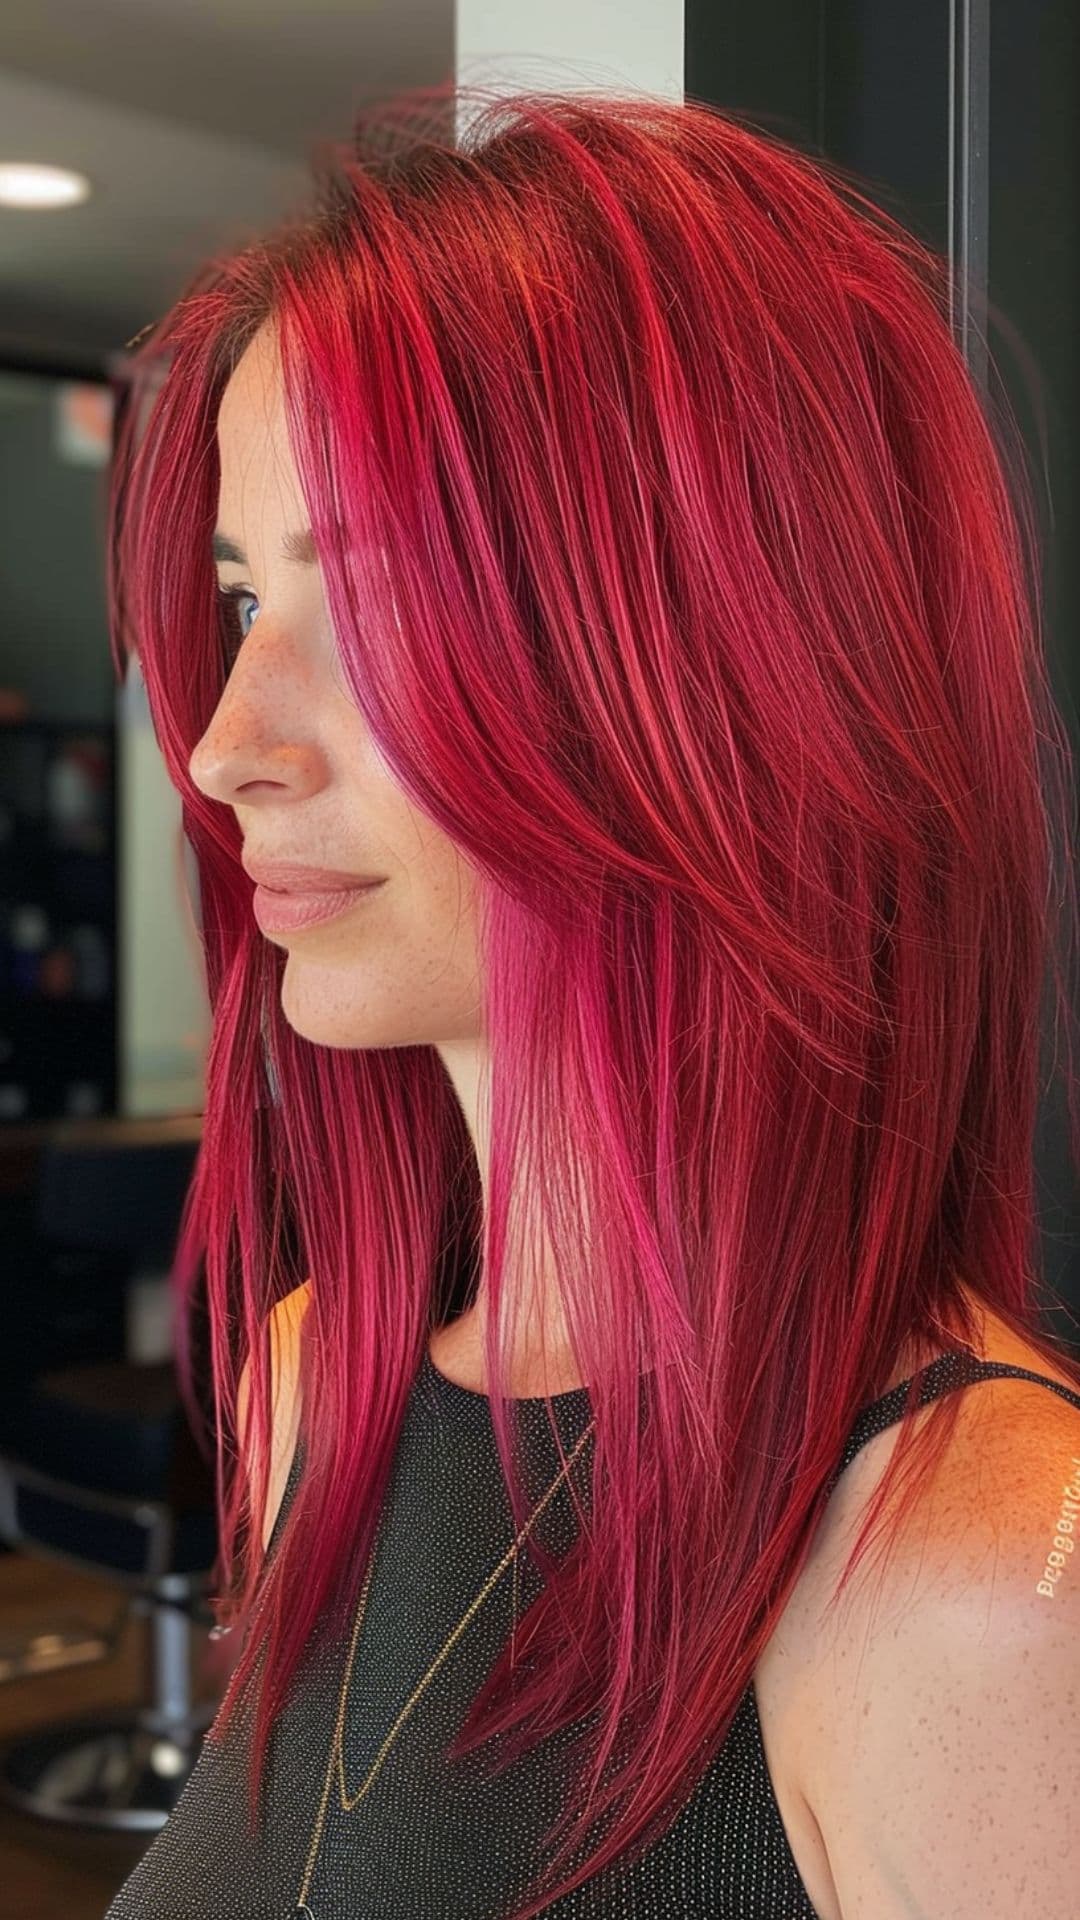 A woman modelling a bright burgundy hair.